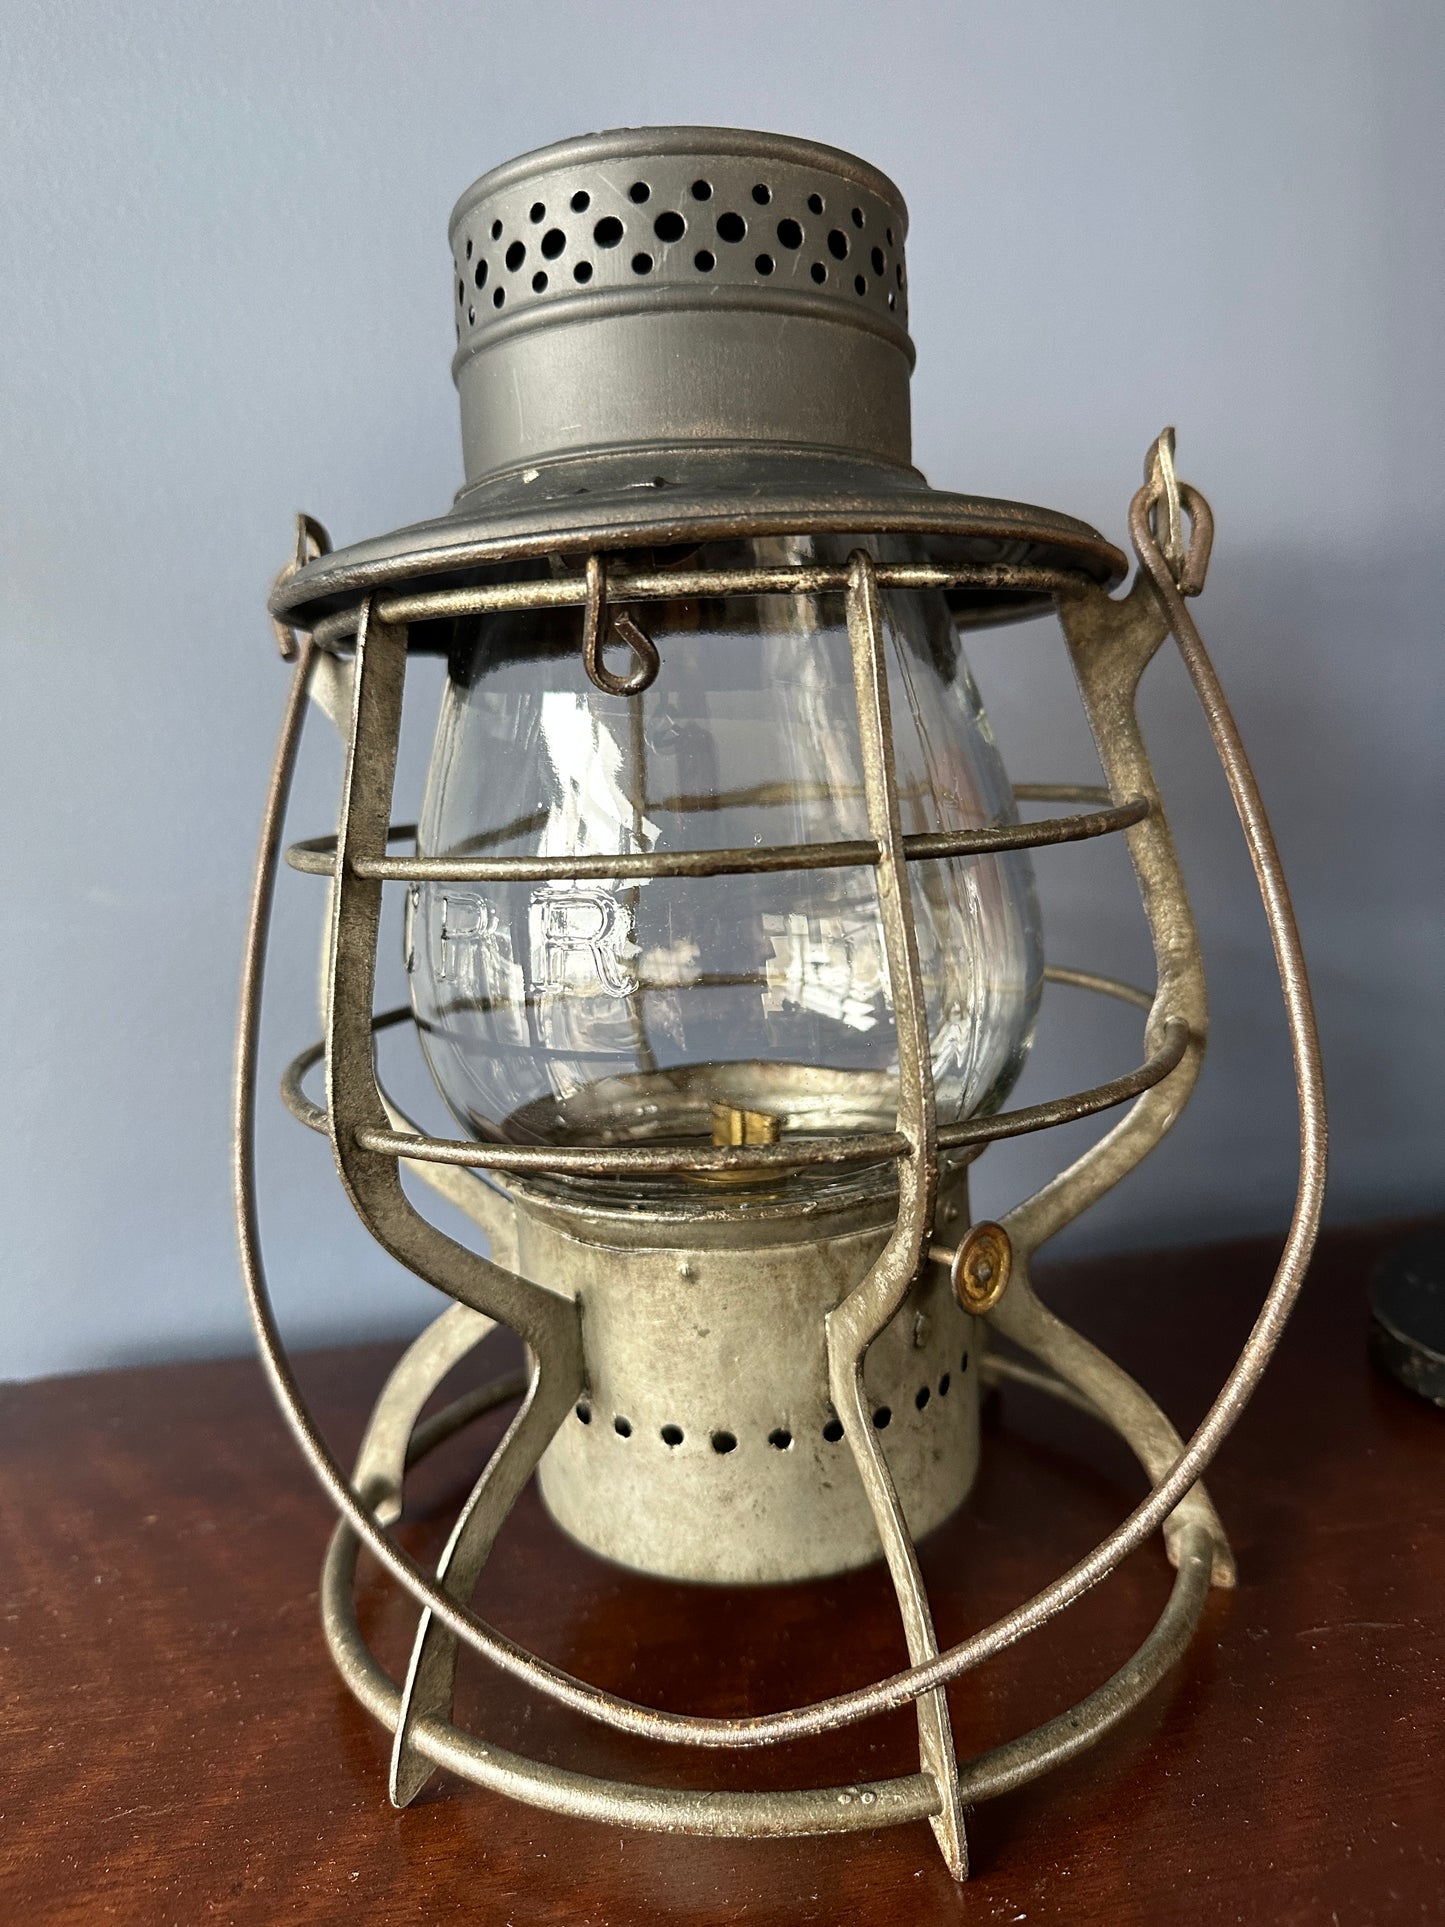 CPR E.T. Wright & Co. Brakeman's Lantern - 1915